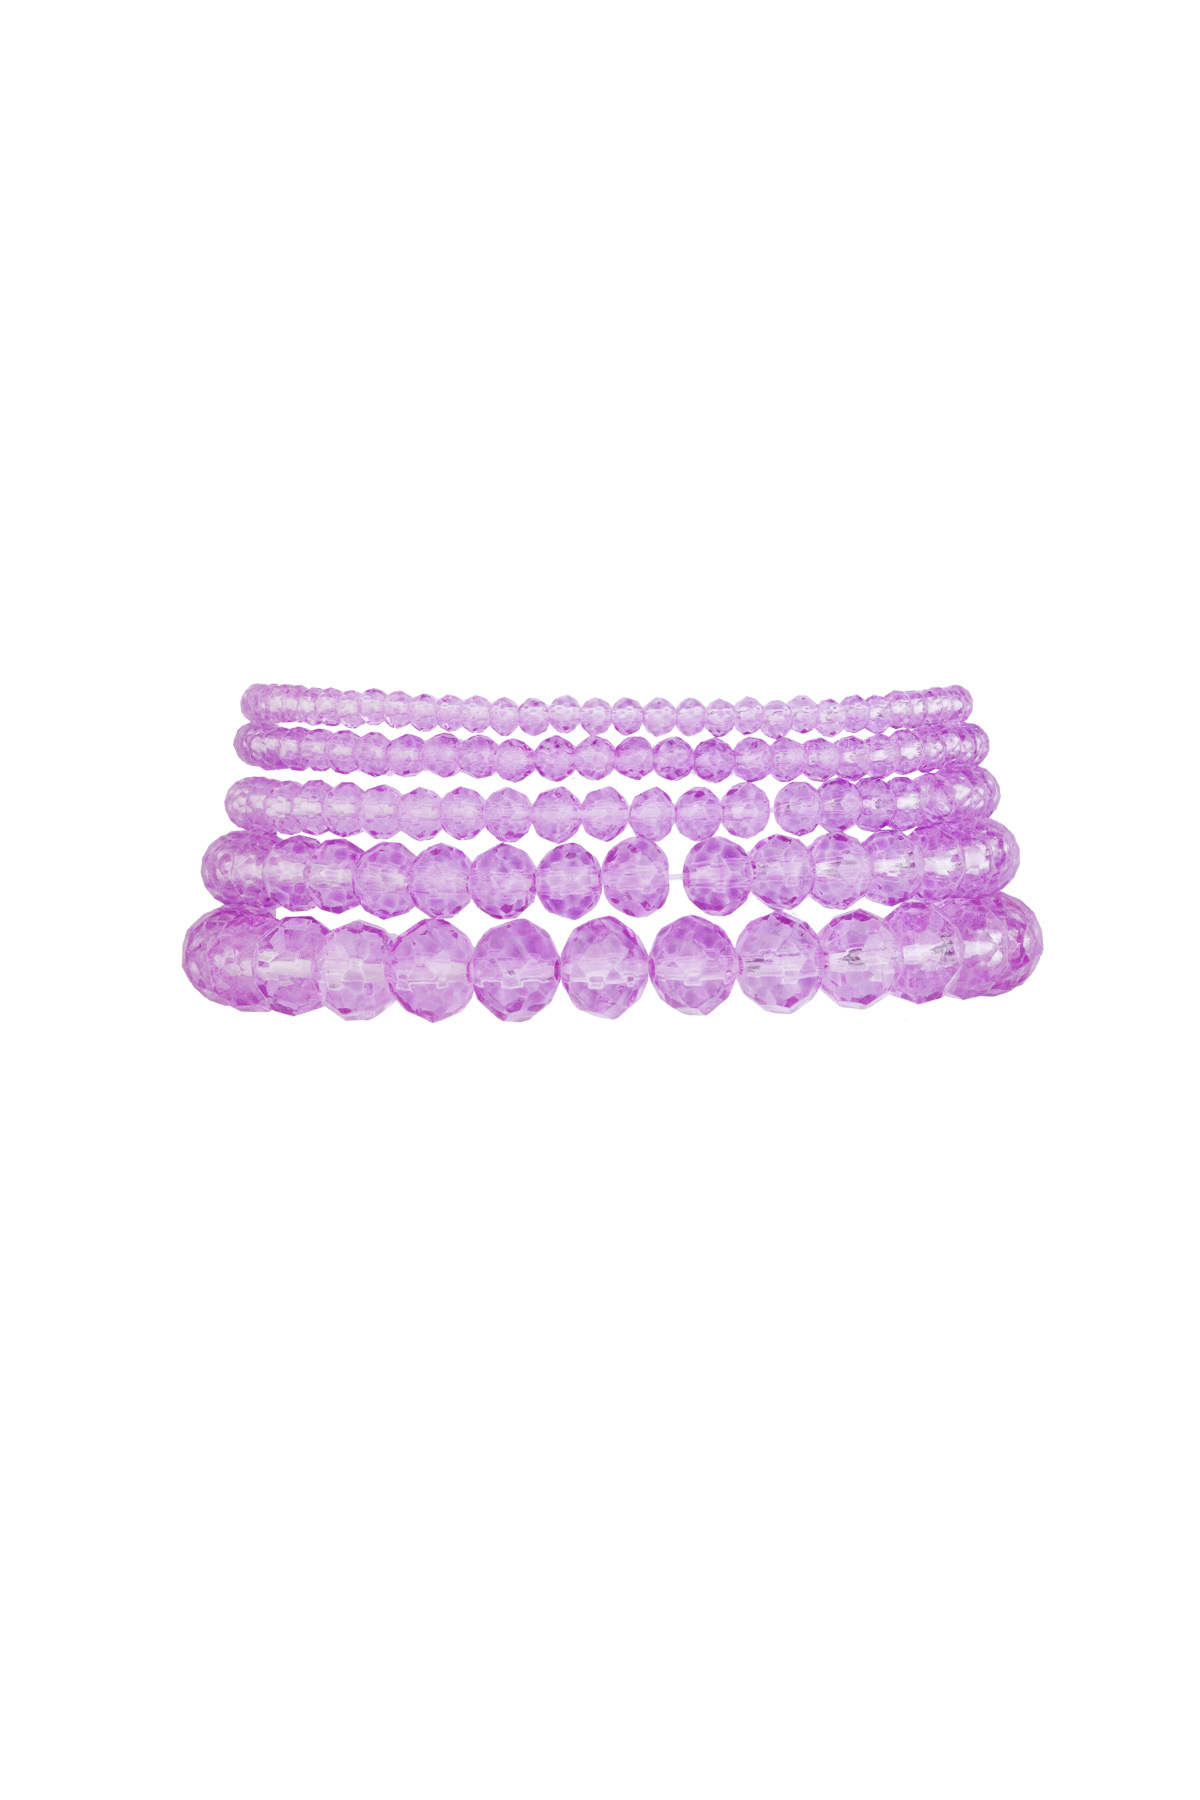 Set mit 5 Kristallarmbändern lila – hellviolett